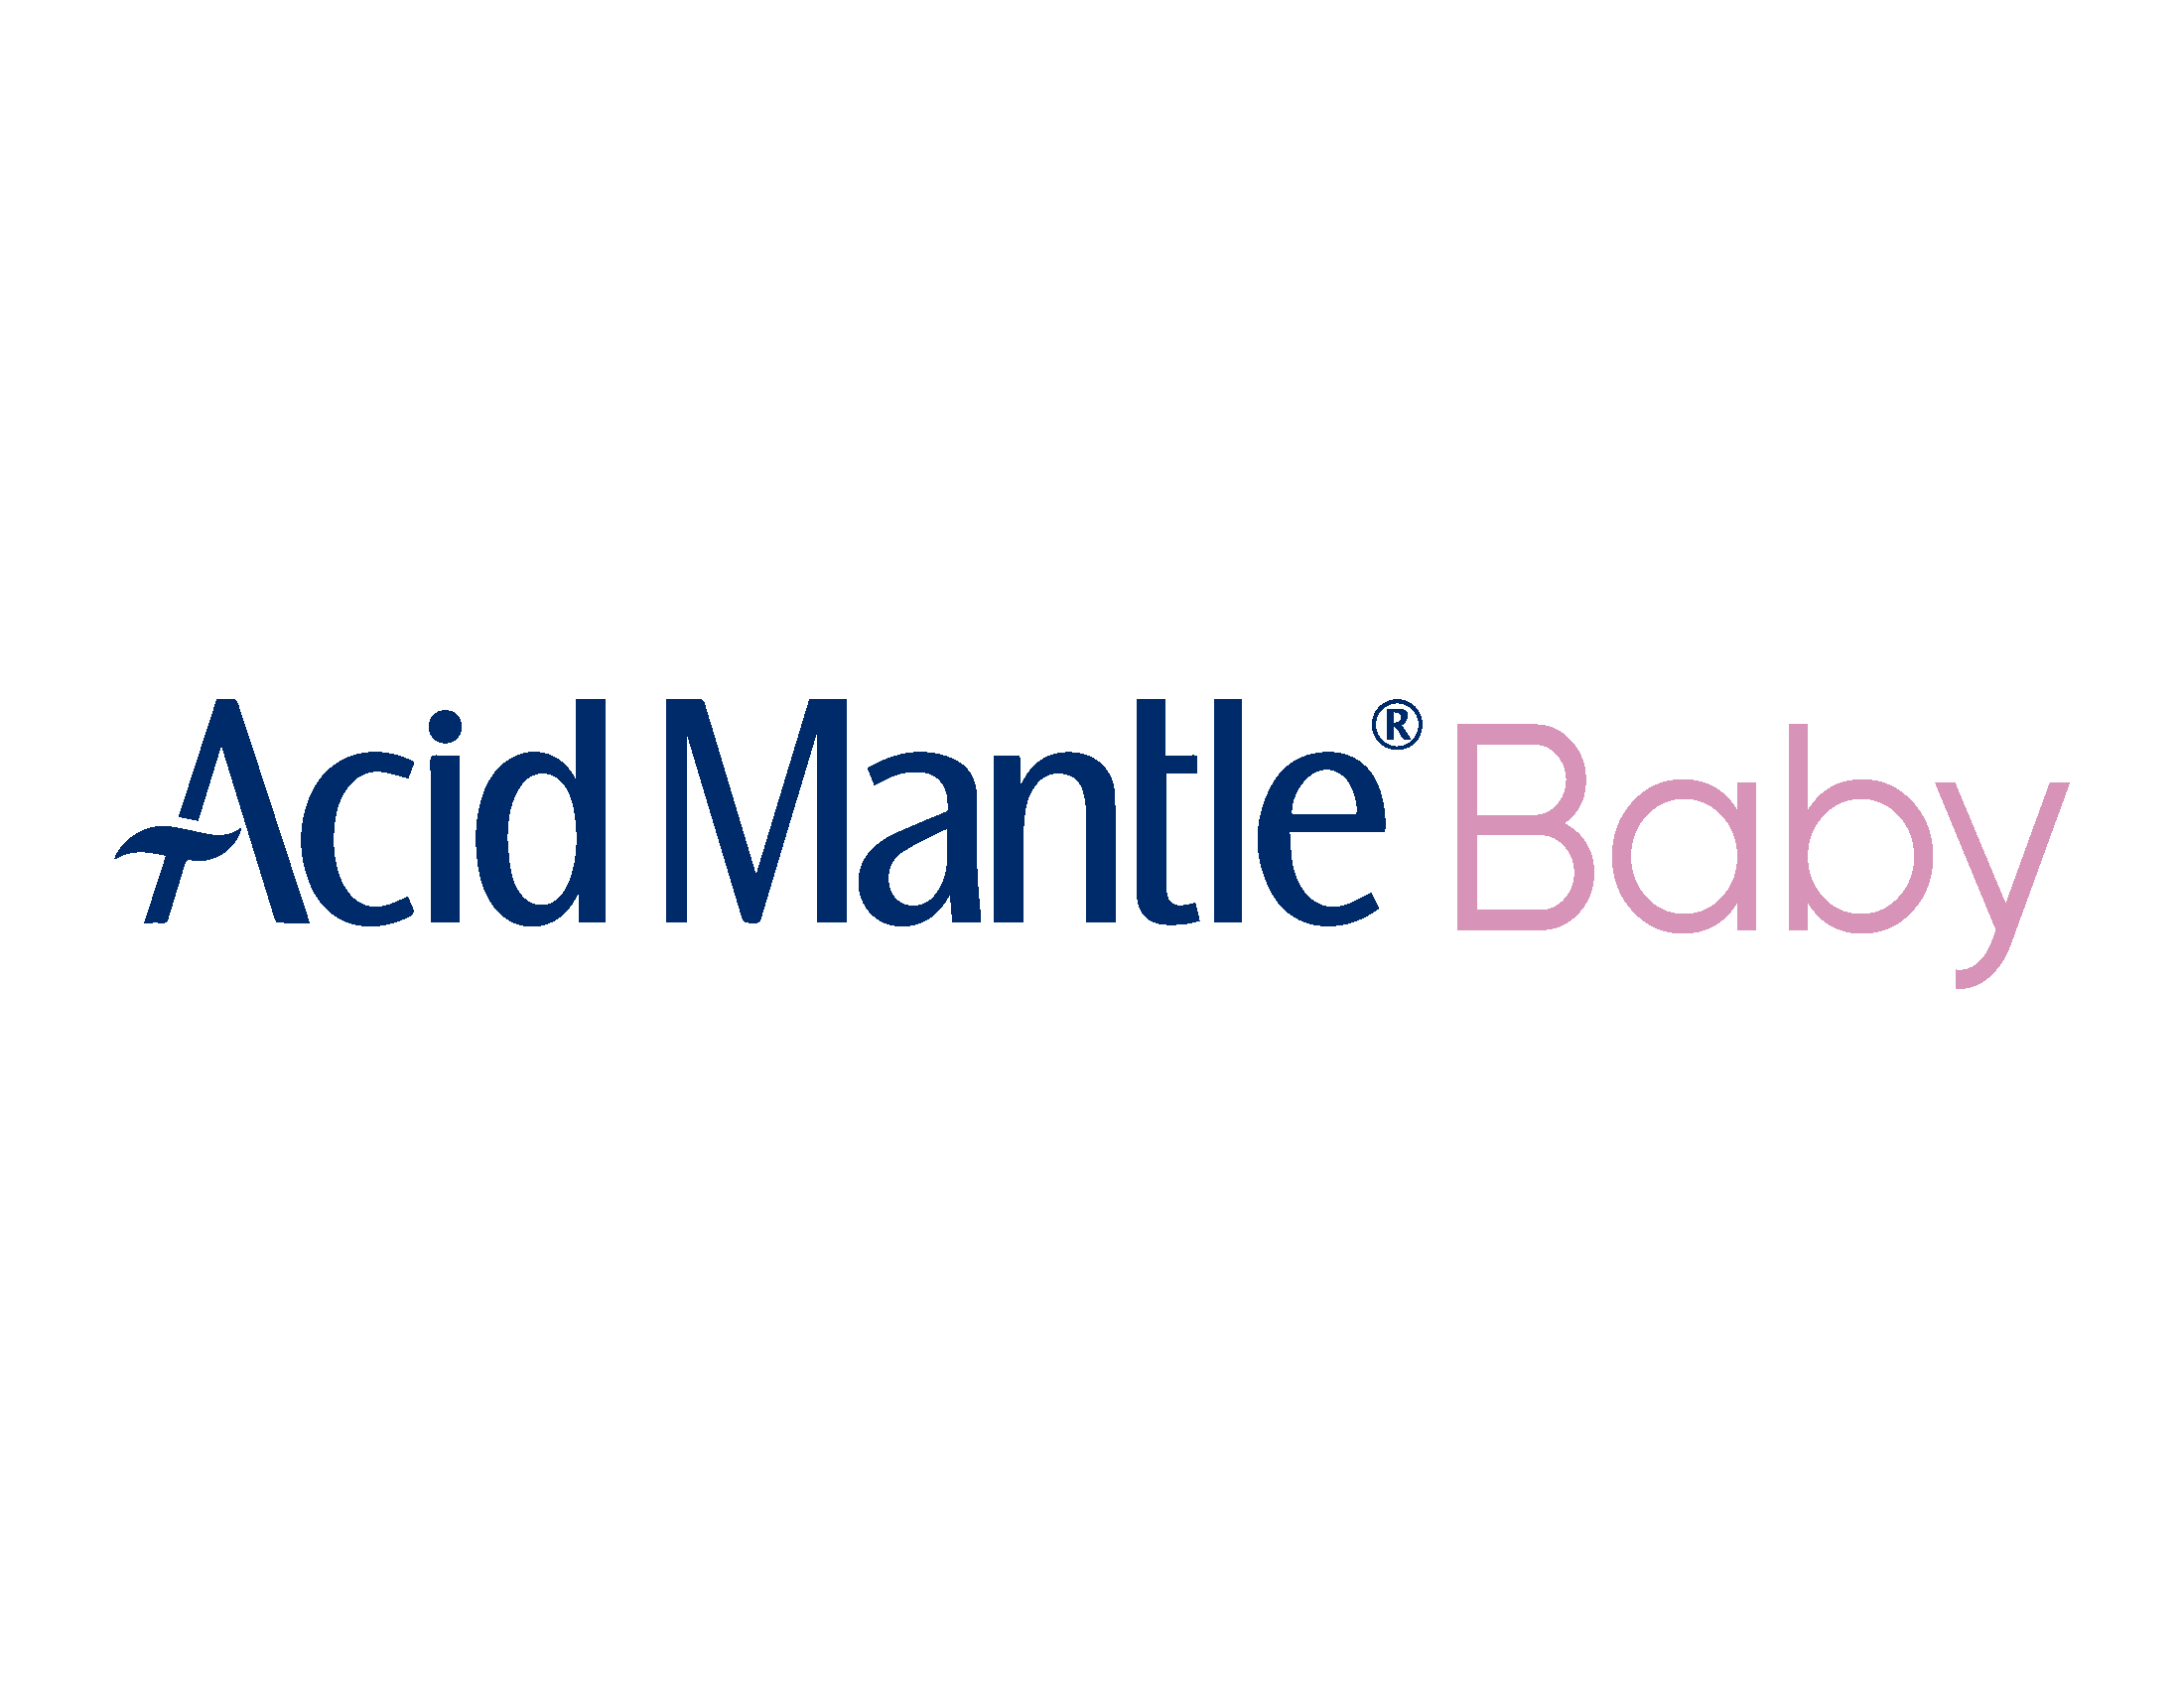 Acid Mantle Baby